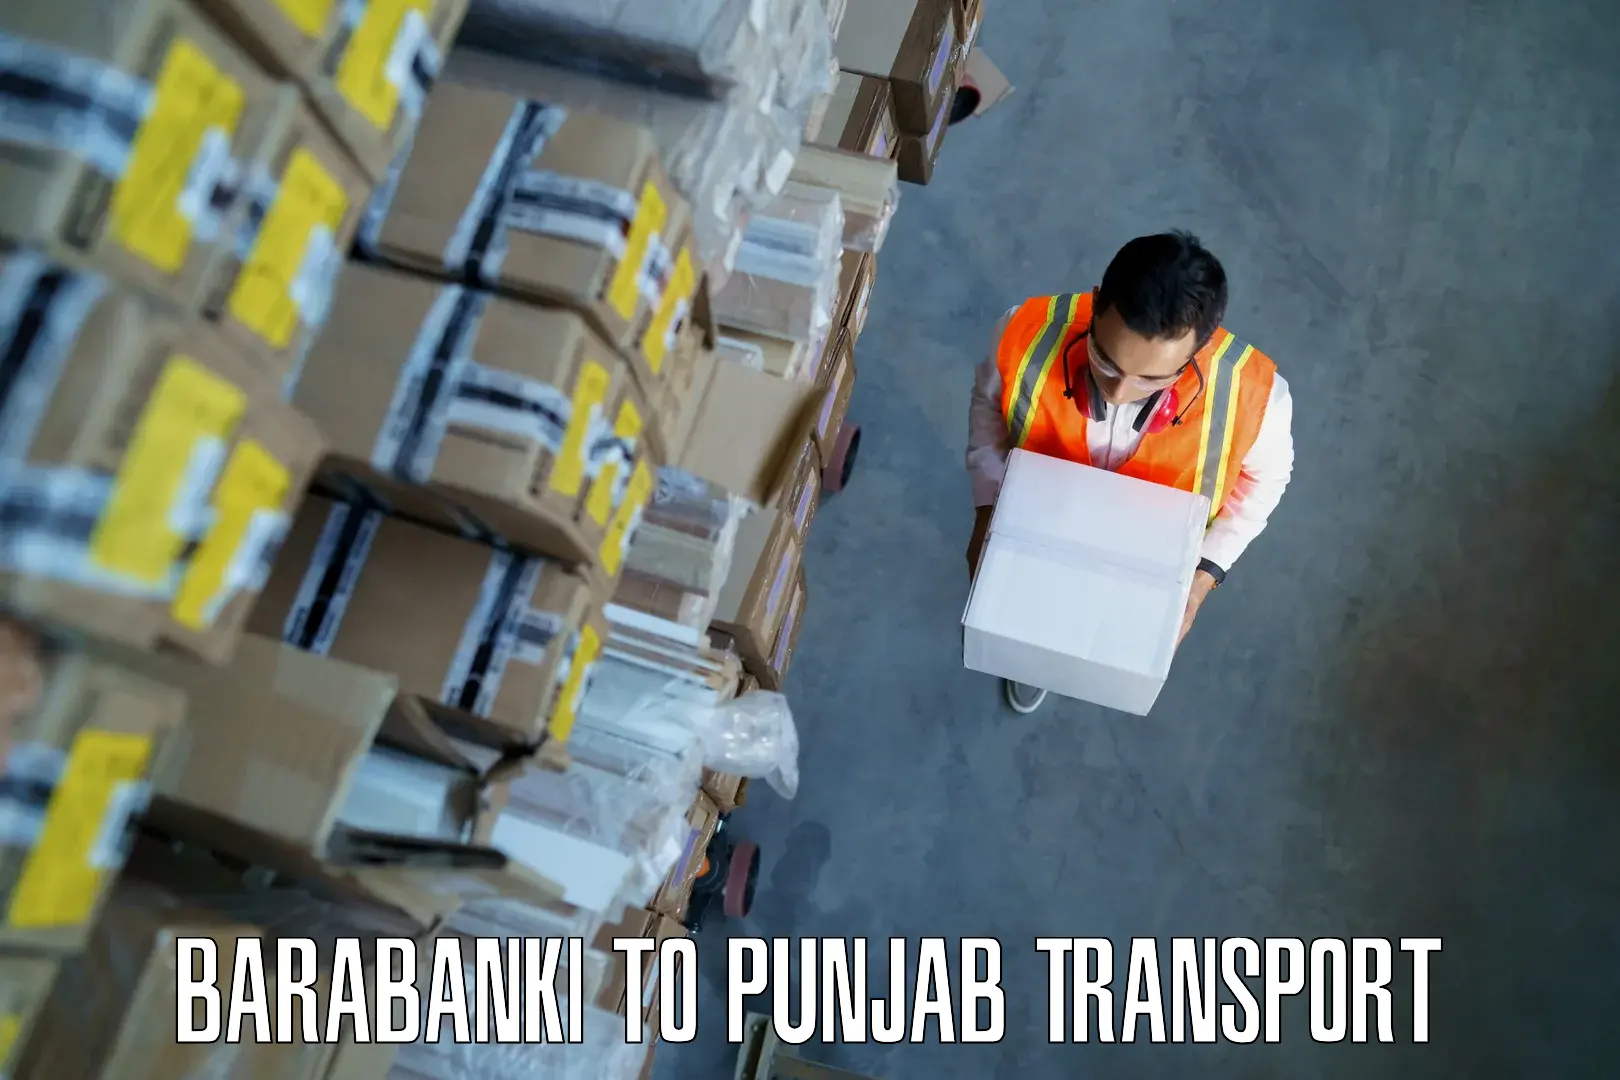 Daily transport service Barabanki to Punjab